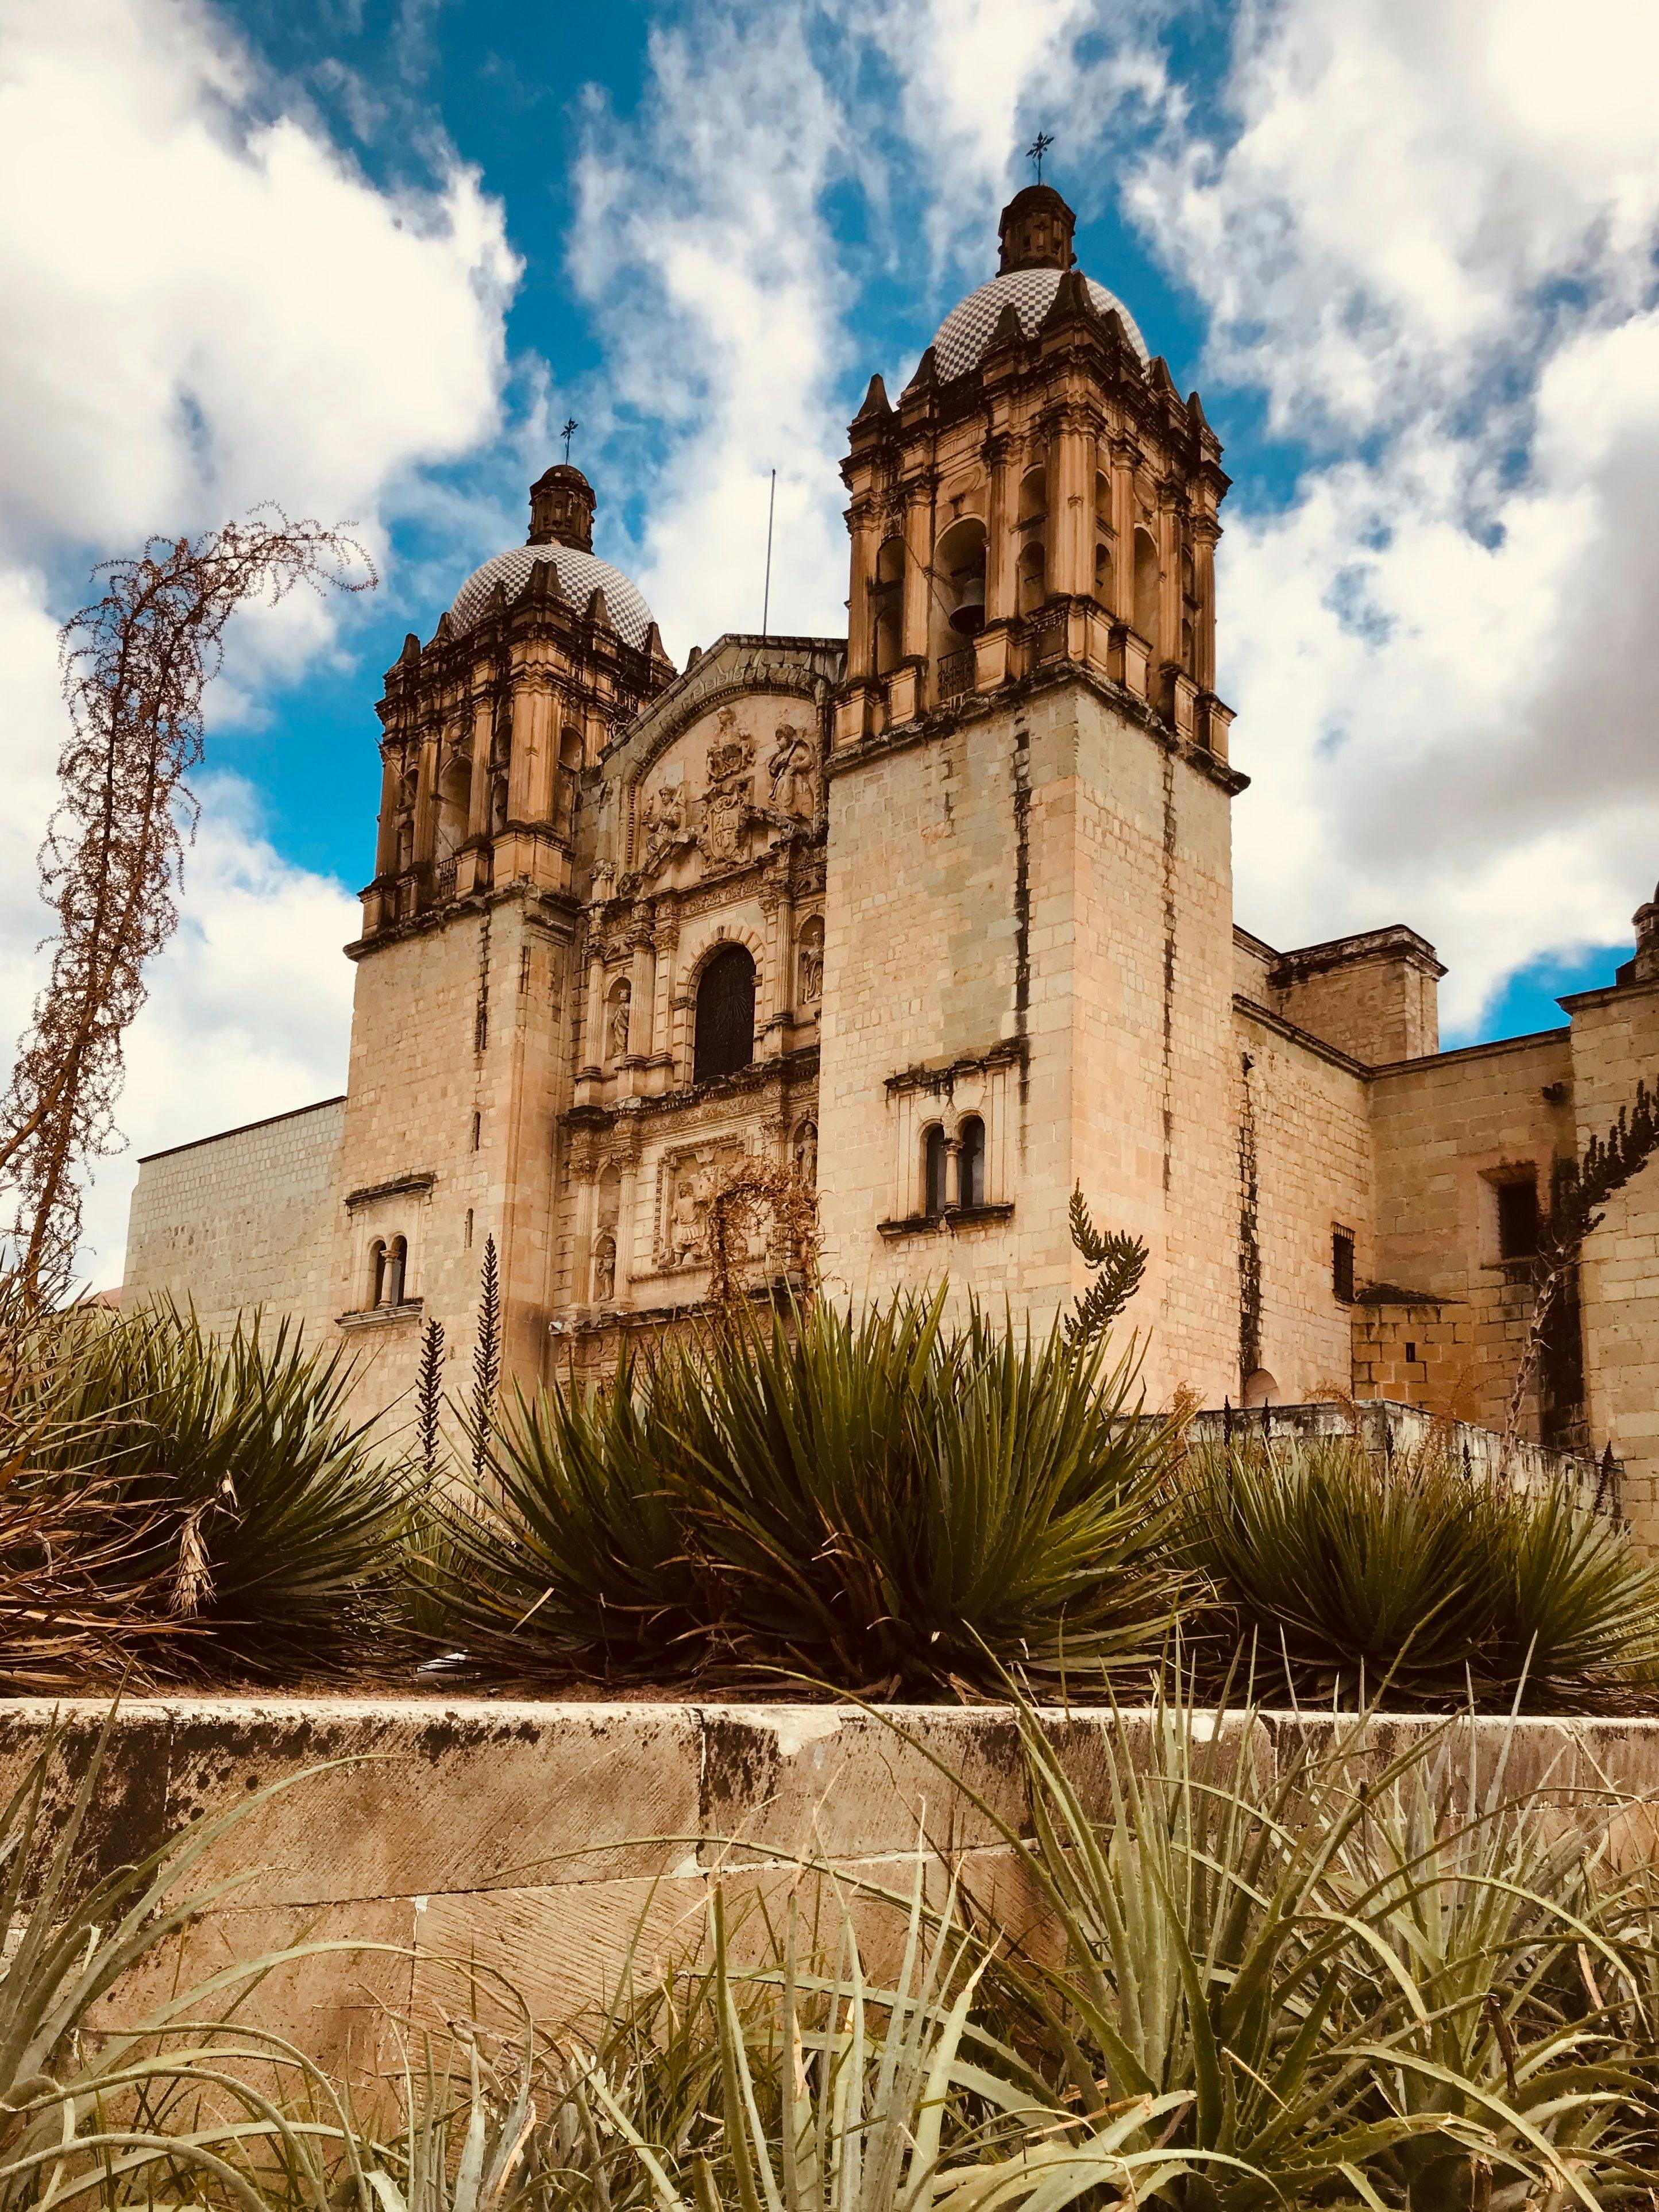 Church in Oaxaca city in Mexico.